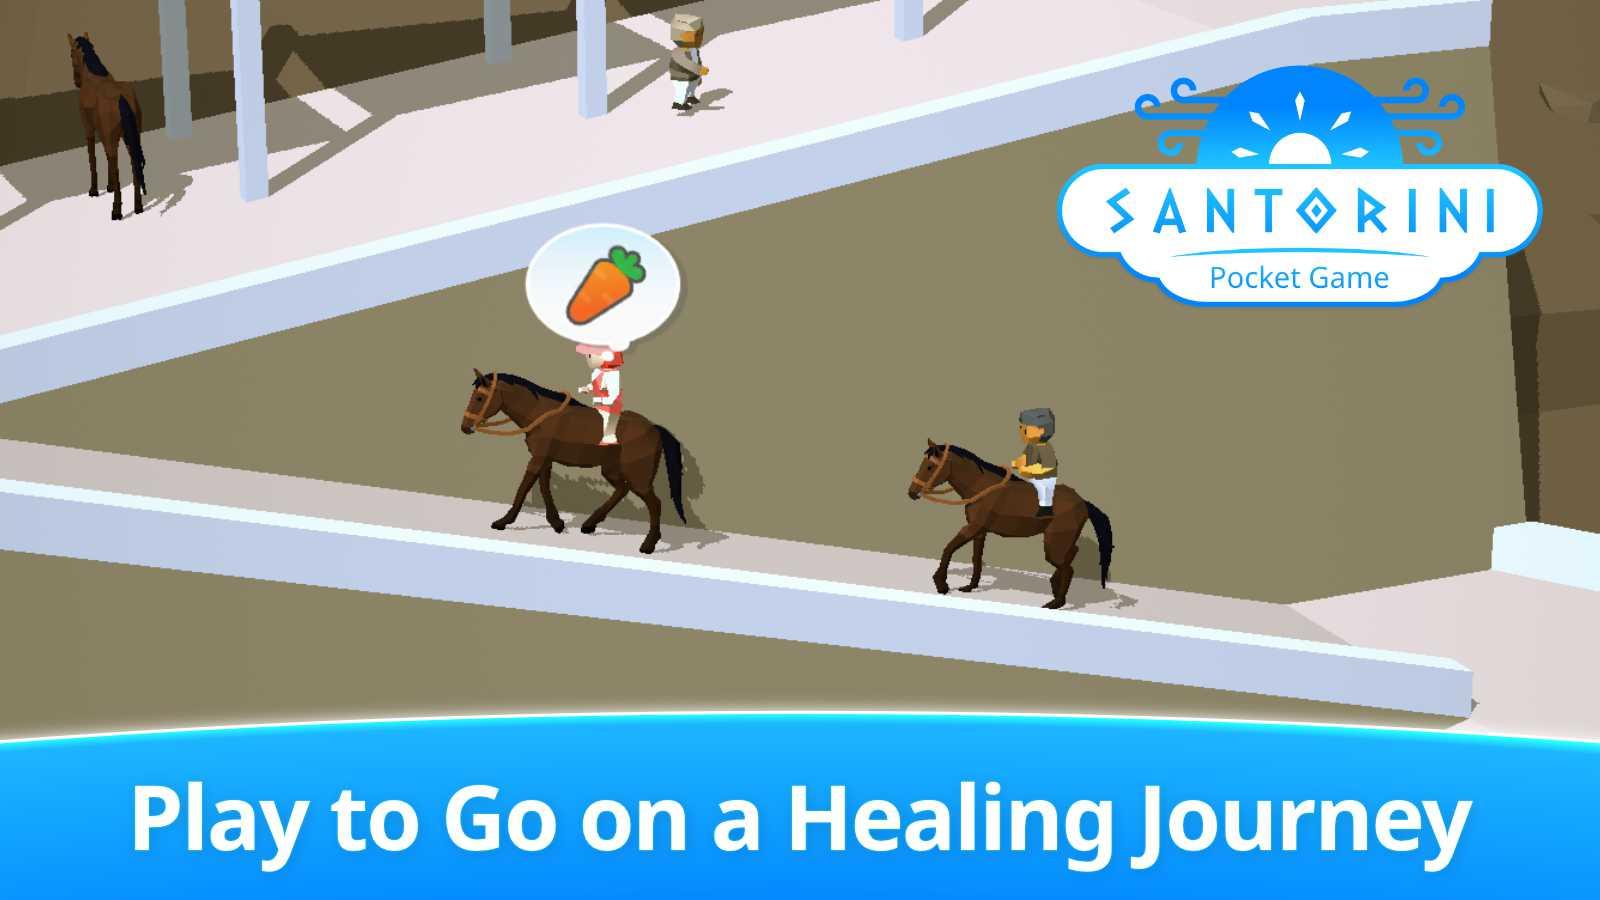 Santorini Pocket Game For Android Apk Download